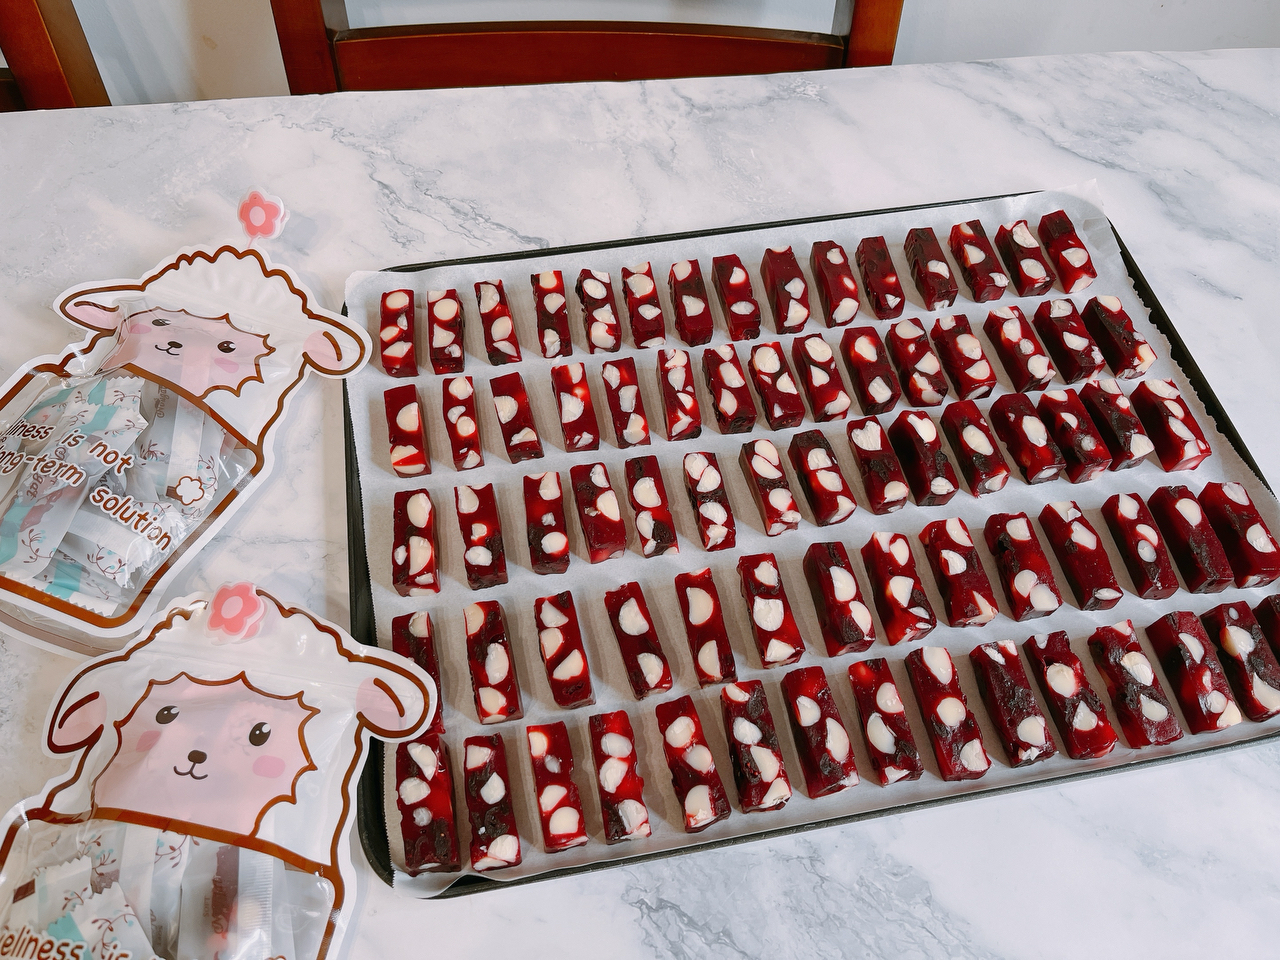 《Tinrry+》夏威夷果莓莓软糖，成功率99.9%